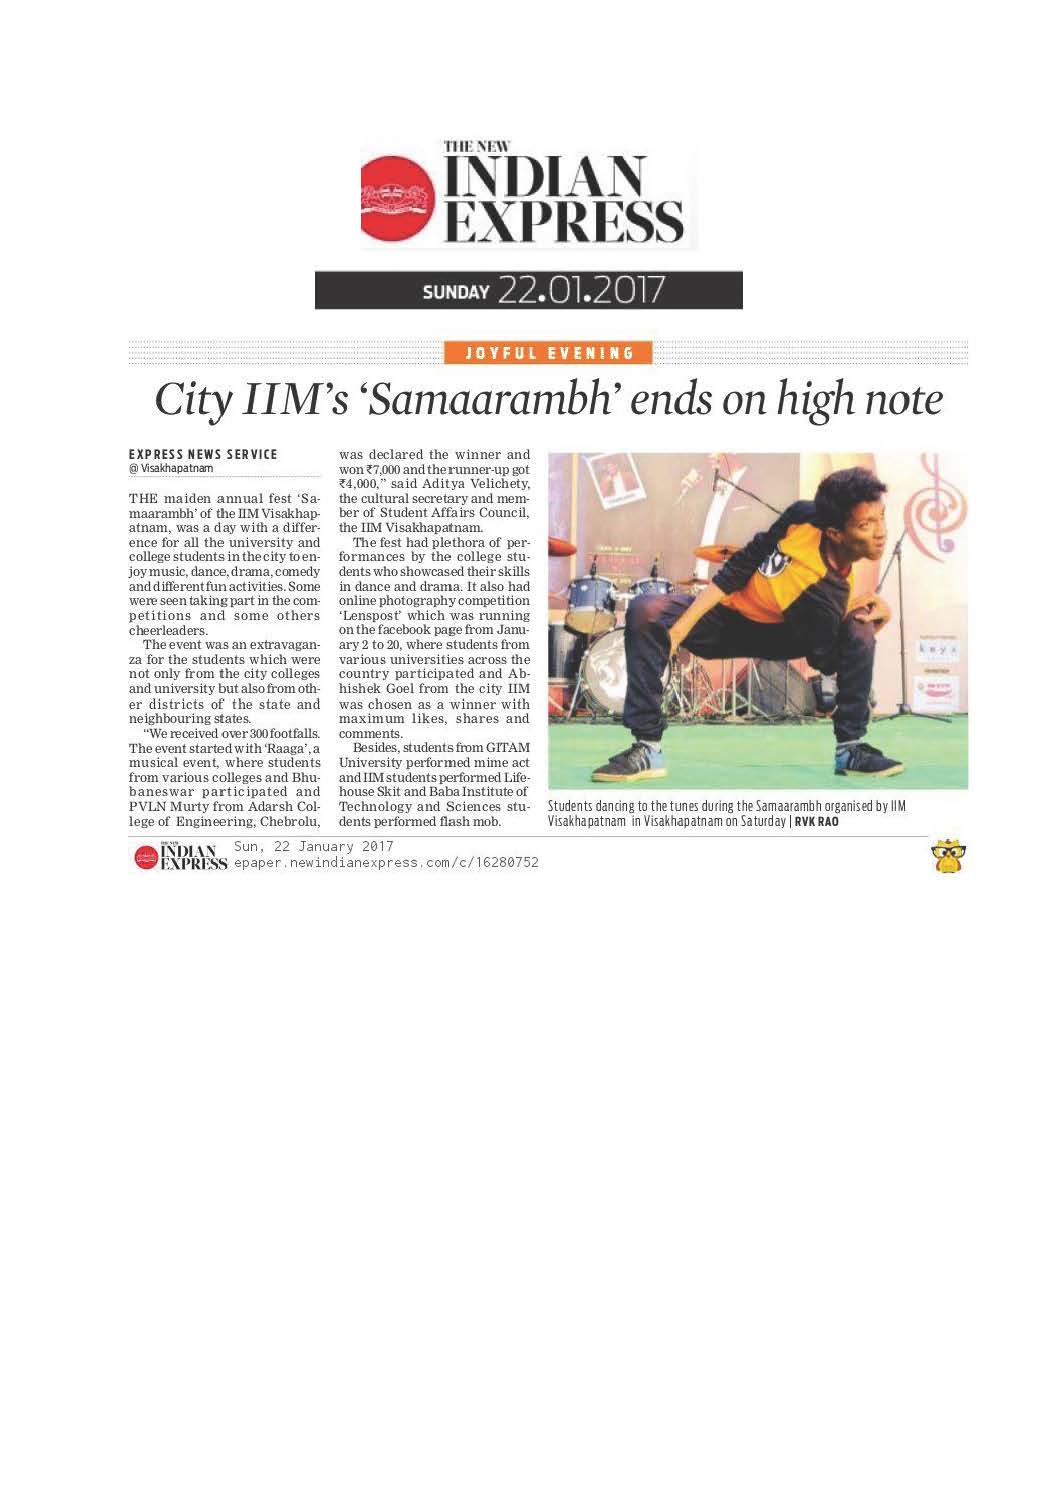 City IIM Samaarambh ends on high note - 21.02.2017